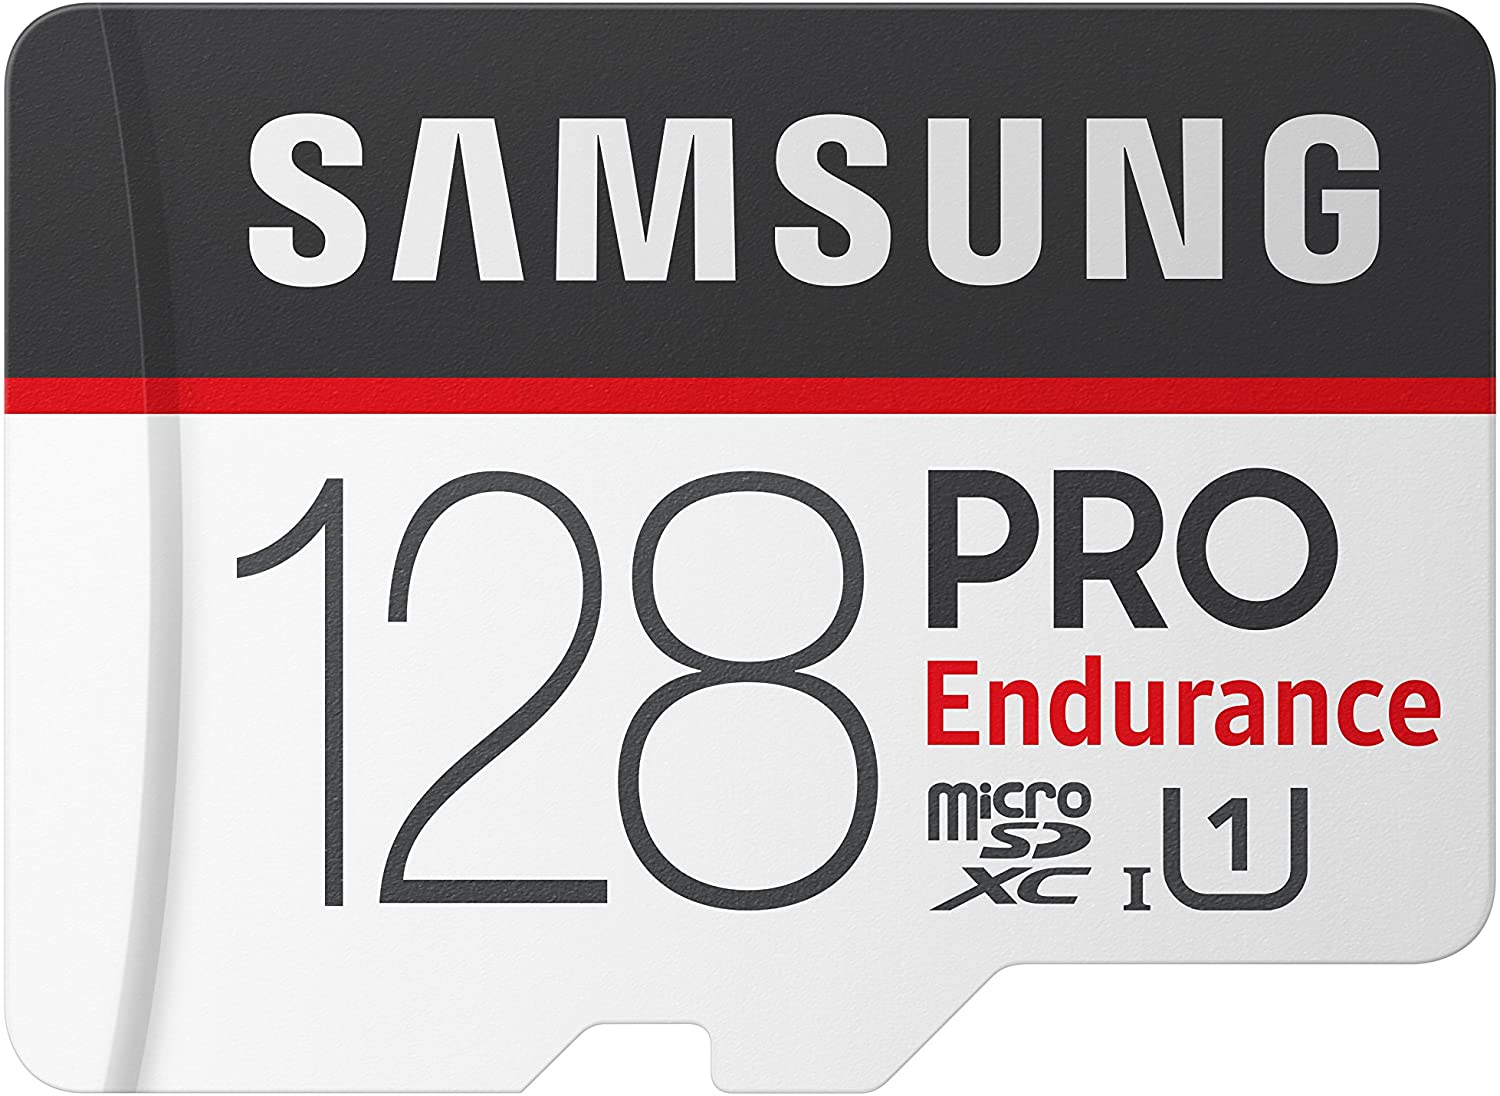 Samsung PRO Endurance 128GB